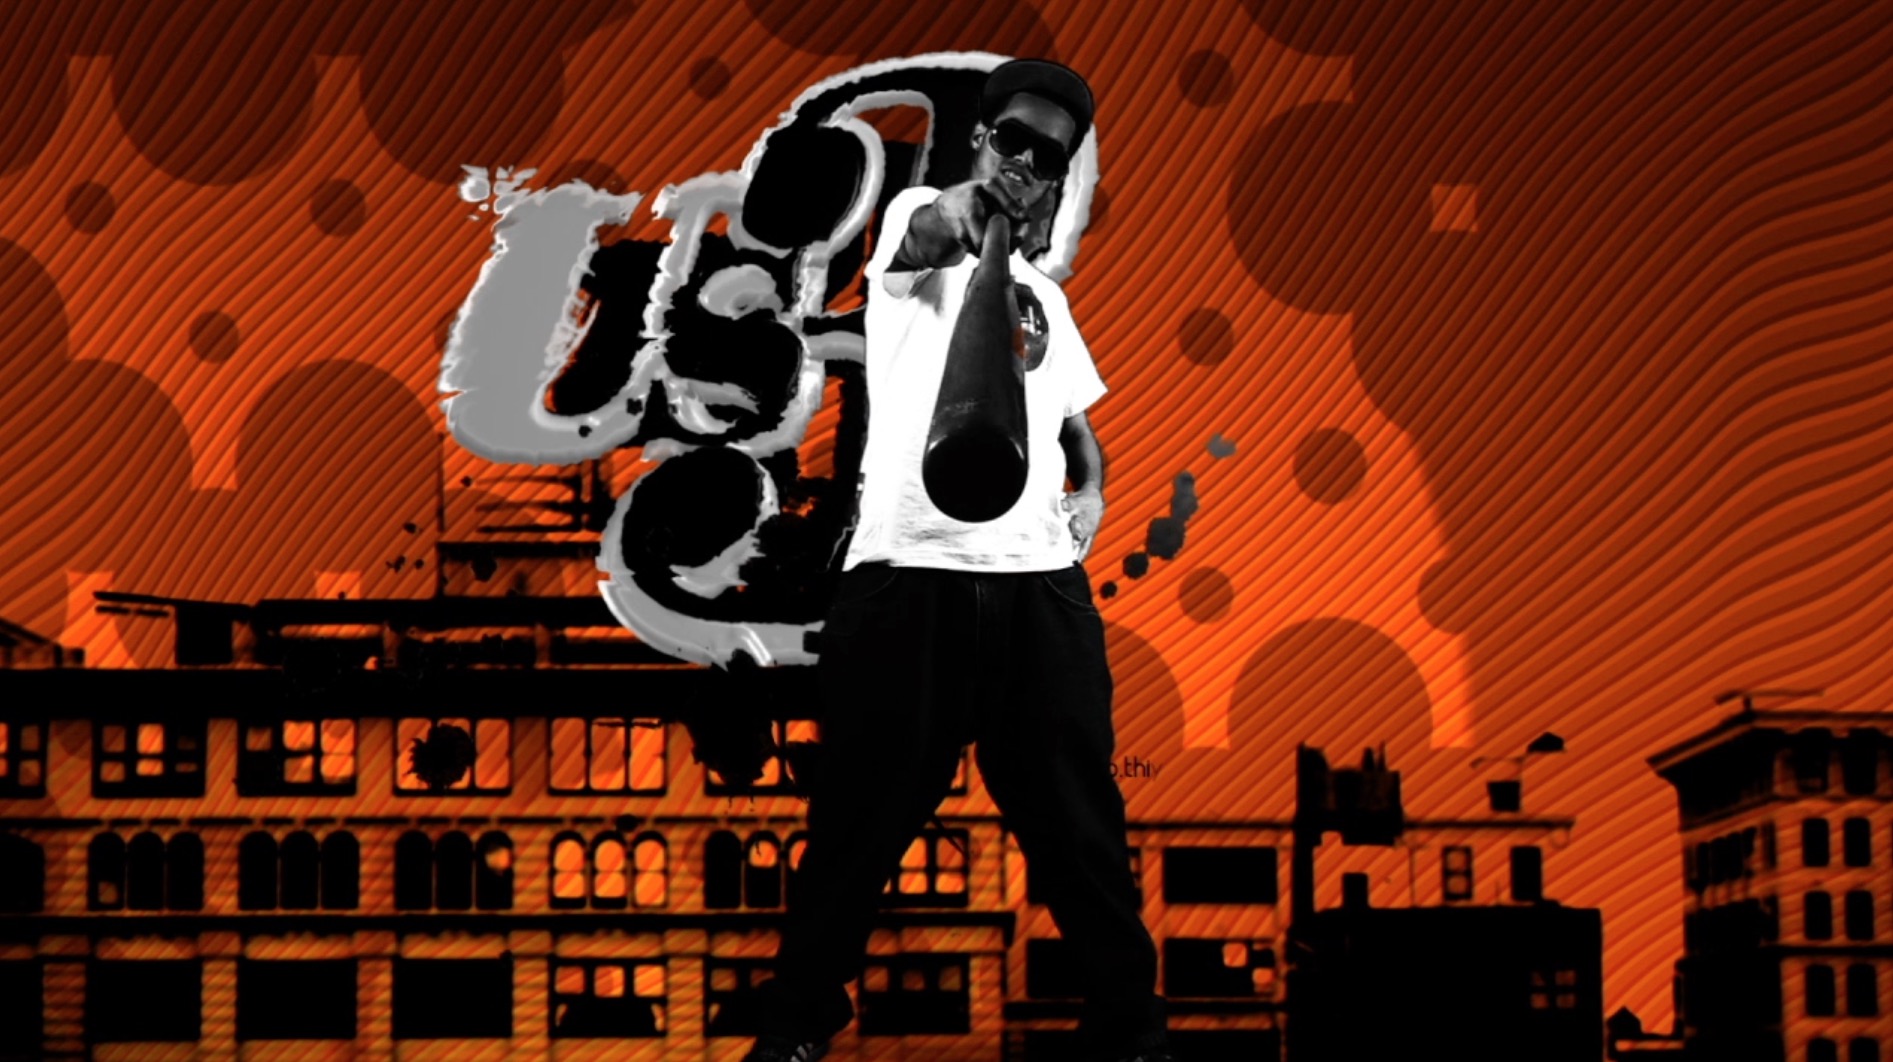 Us3 - Turn It Up - Music Video